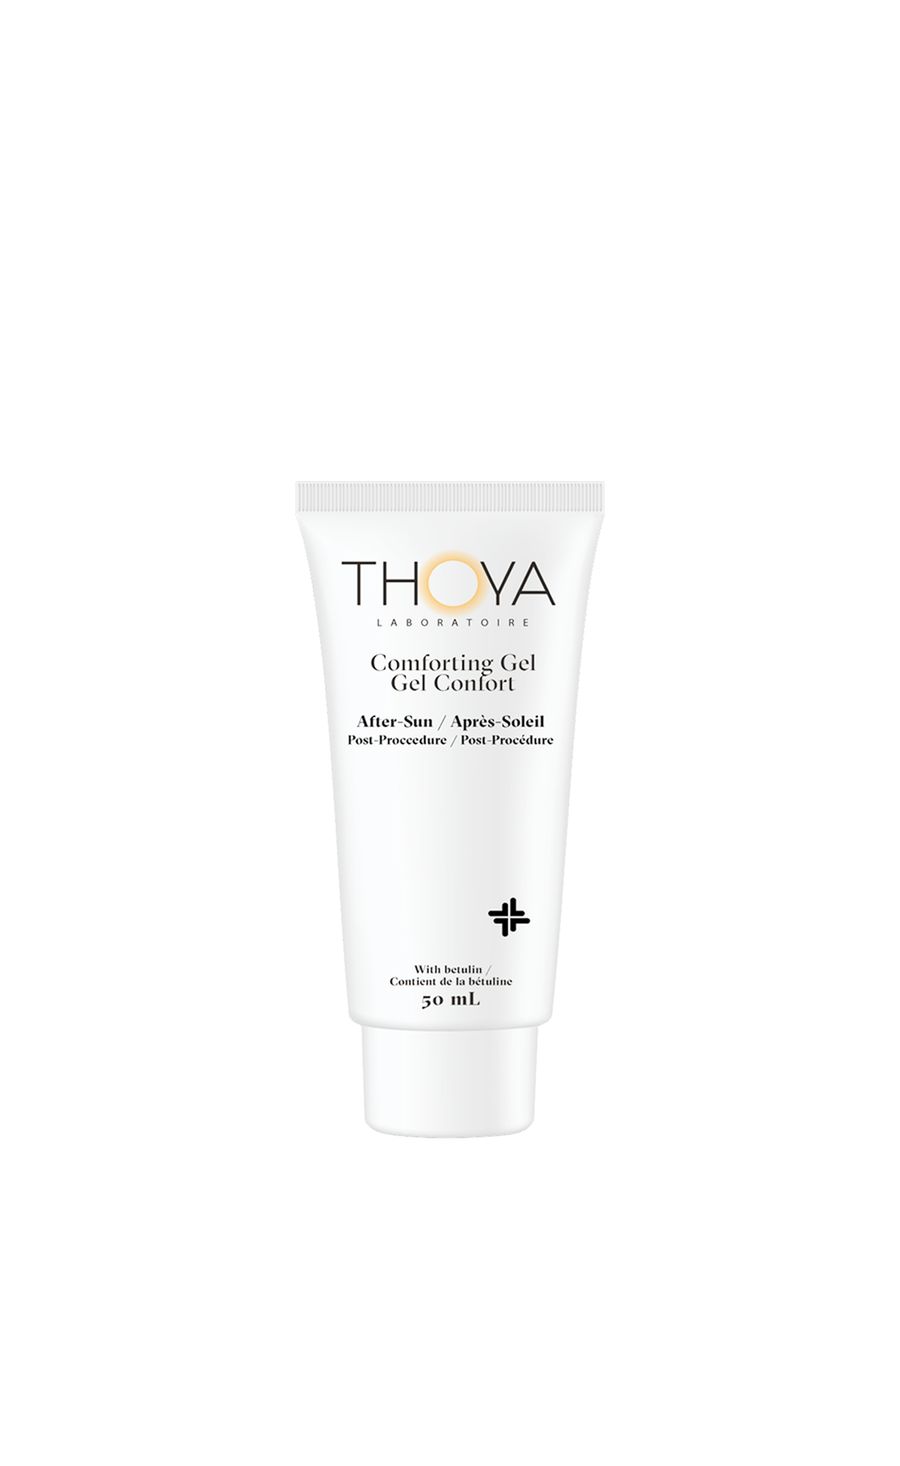 Thoya All Comforting Gel - After sun – Post procedure -Best all natural skincare - Hypoallergernic - Dermatologist tested - Fragrance free